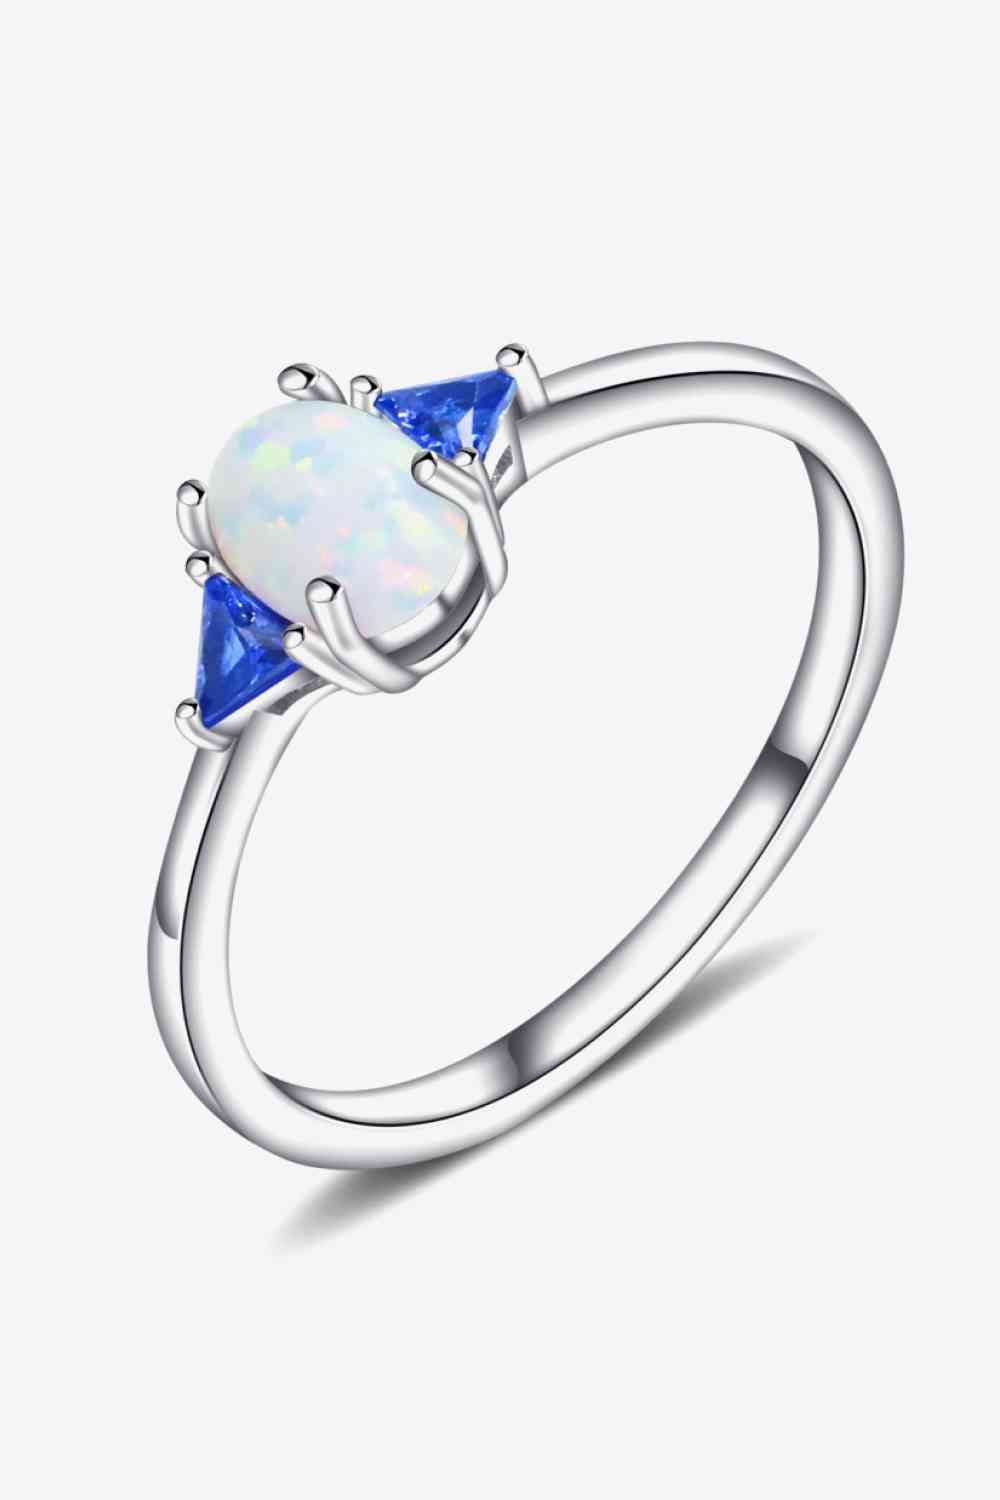 Contrast 925 Sterling Silver Opal Ring Cobalt Blue